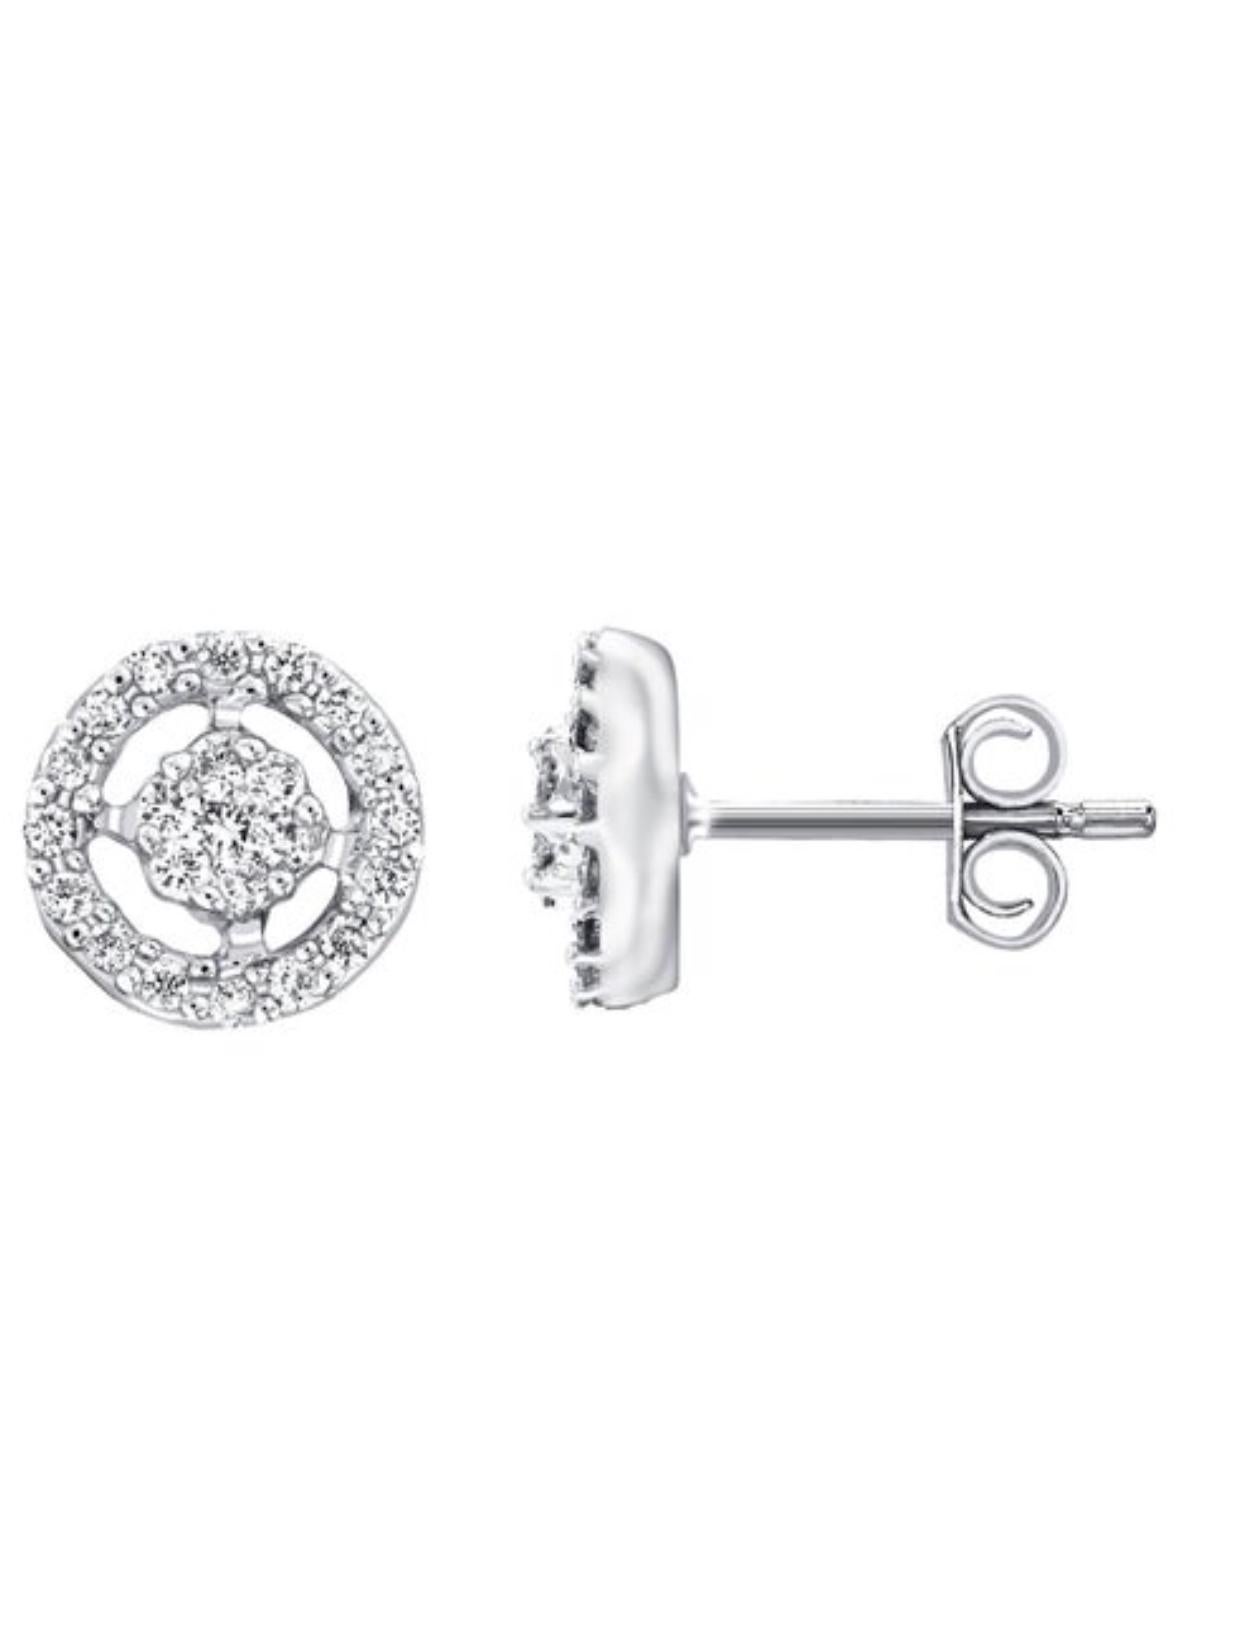 Earrings 0.75 Carat Cluster Halo 18 Karat White Gold Round White Diamond Stud For Sale 1